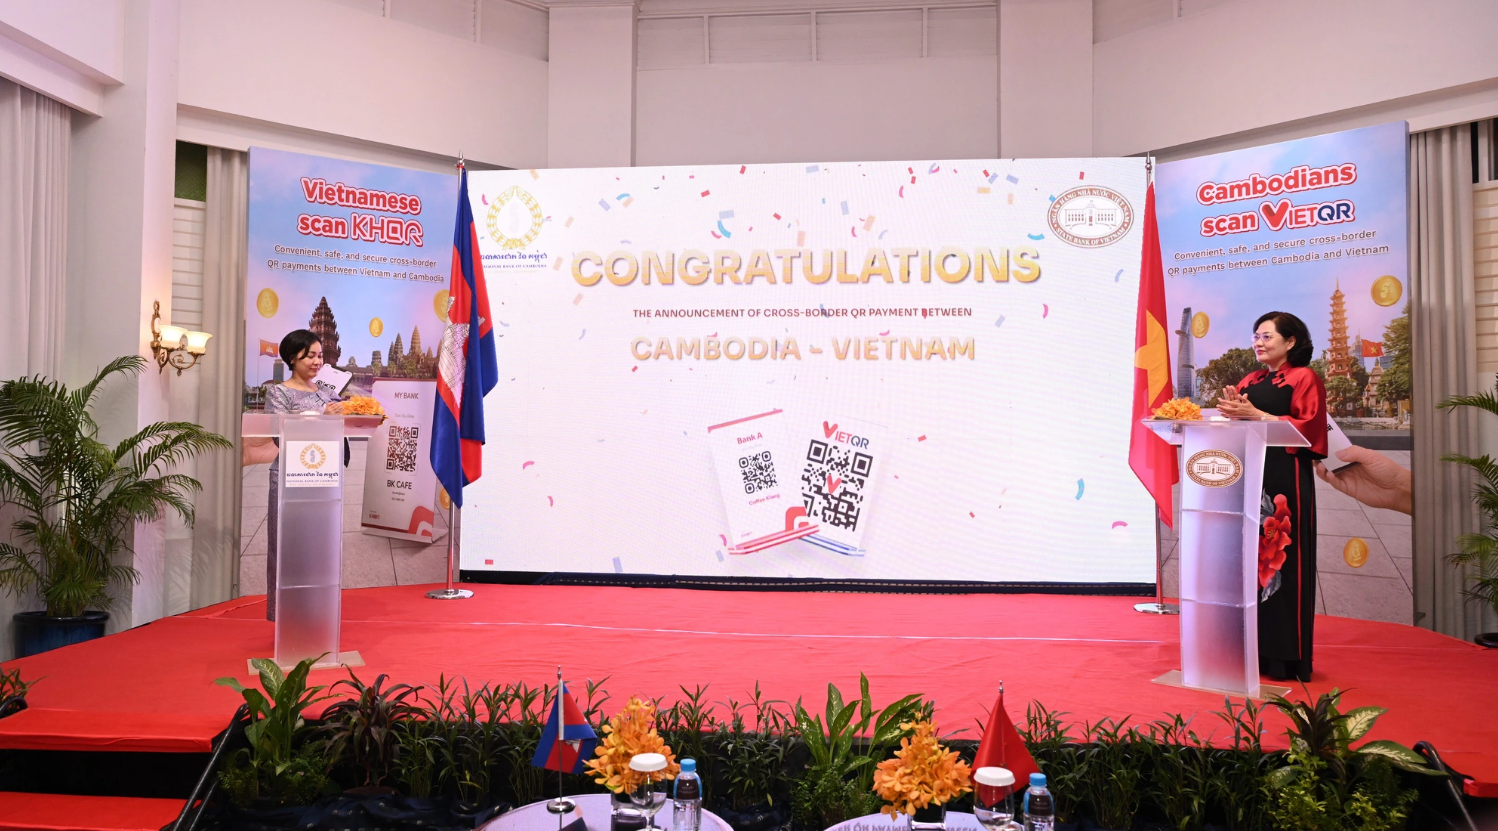 Vietnam, Cambodia launch cross-border QR code payment link